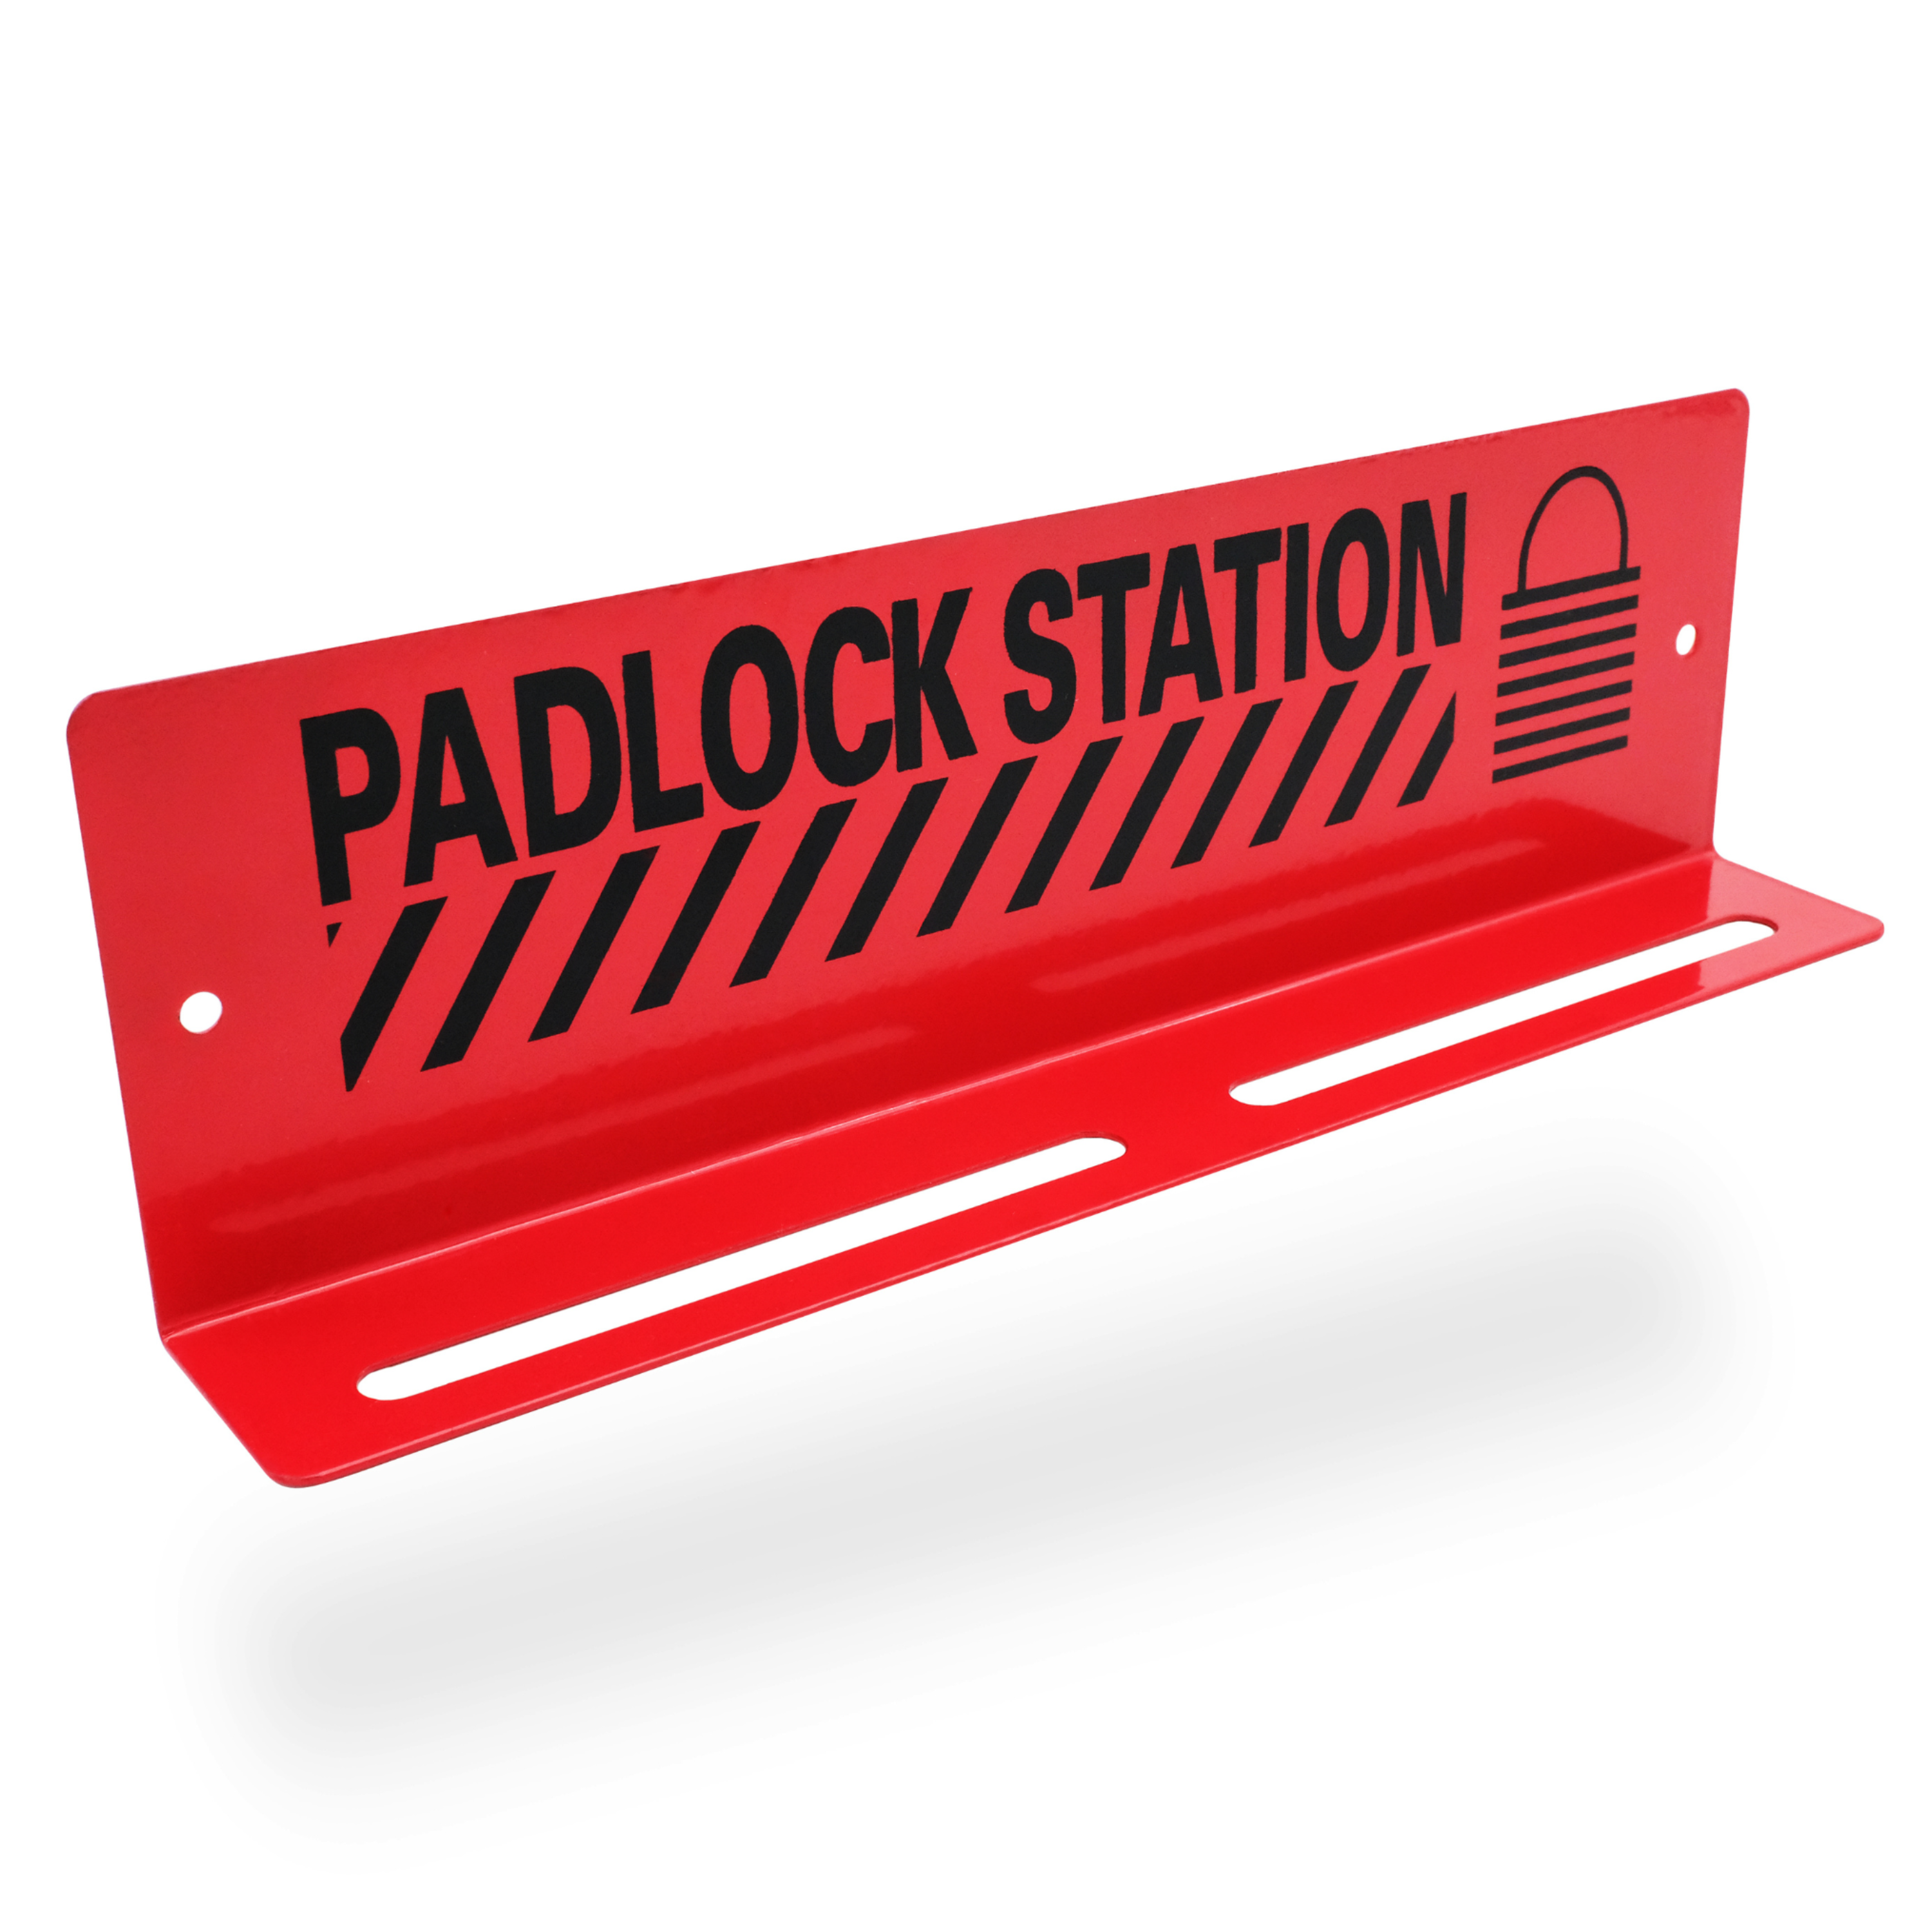 Safety Padlock Lockout Tagout Station – Fits 10 Padlocks – LOTO Locks Not Included